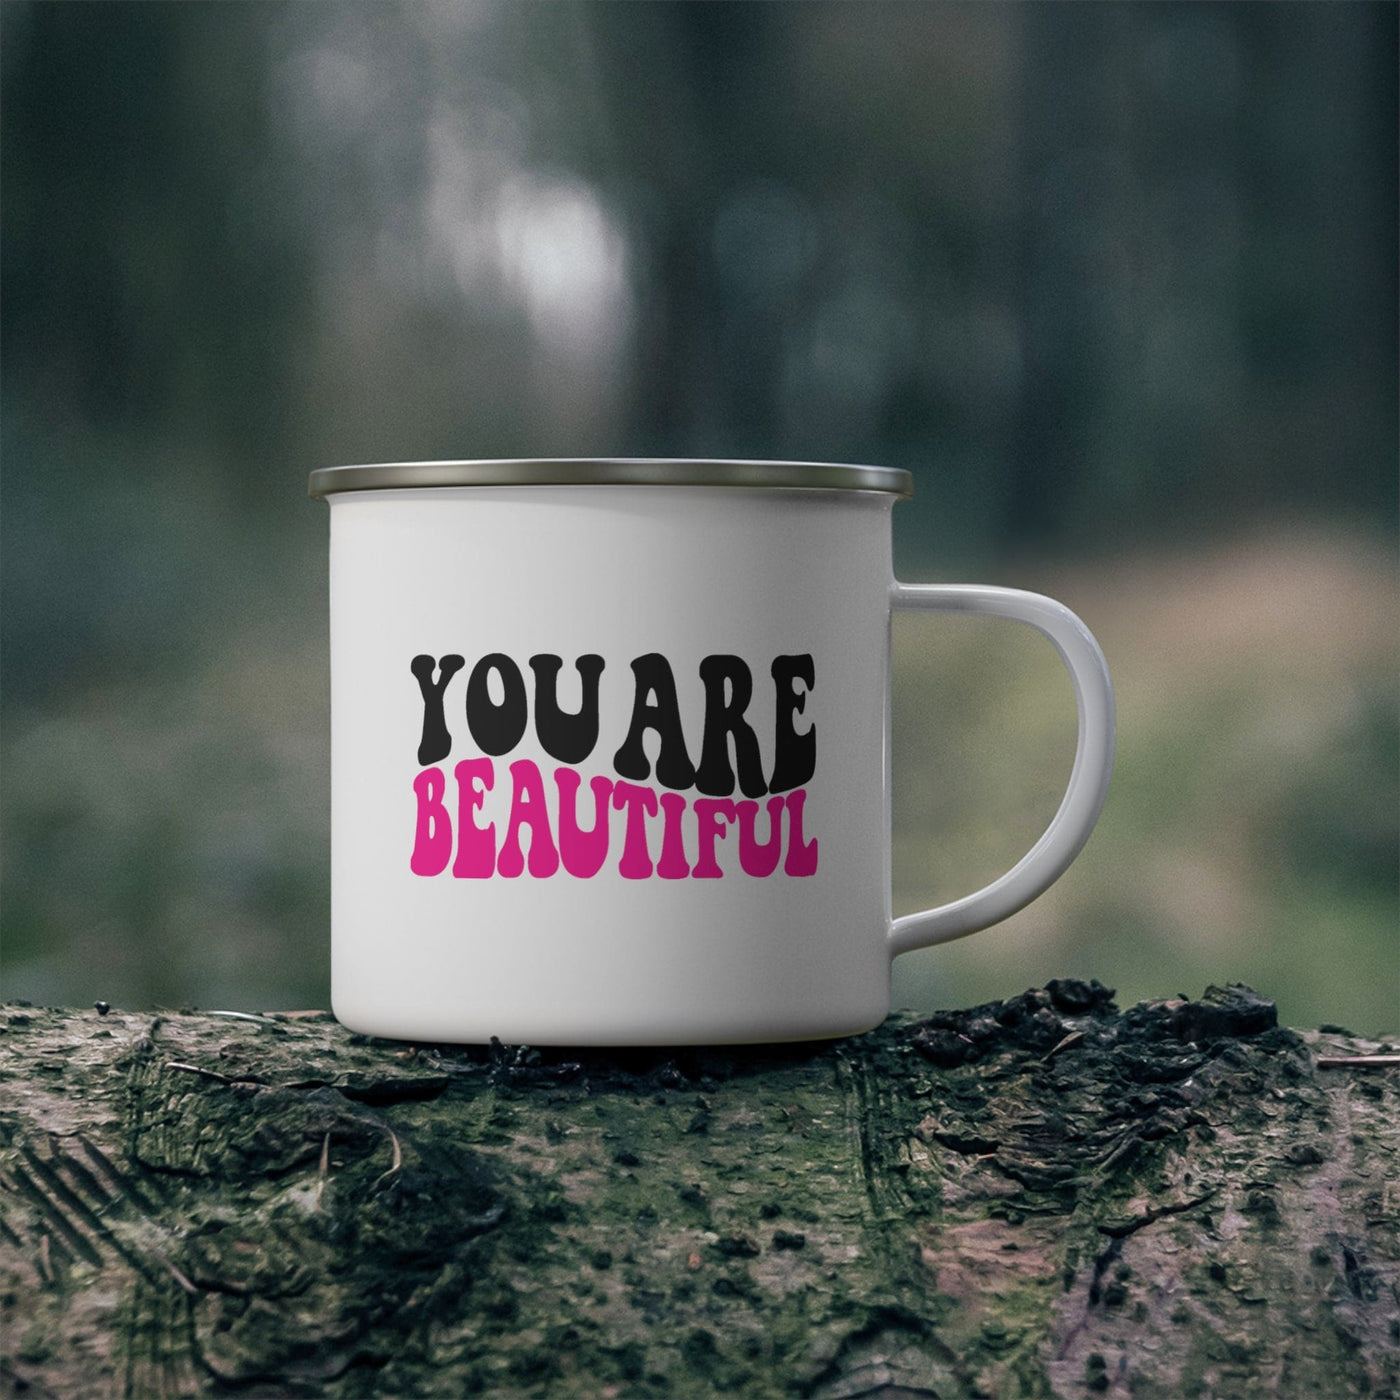 Enamel Camping Mug You Are Beautiful Retro Wavy Pink Black Inspiration